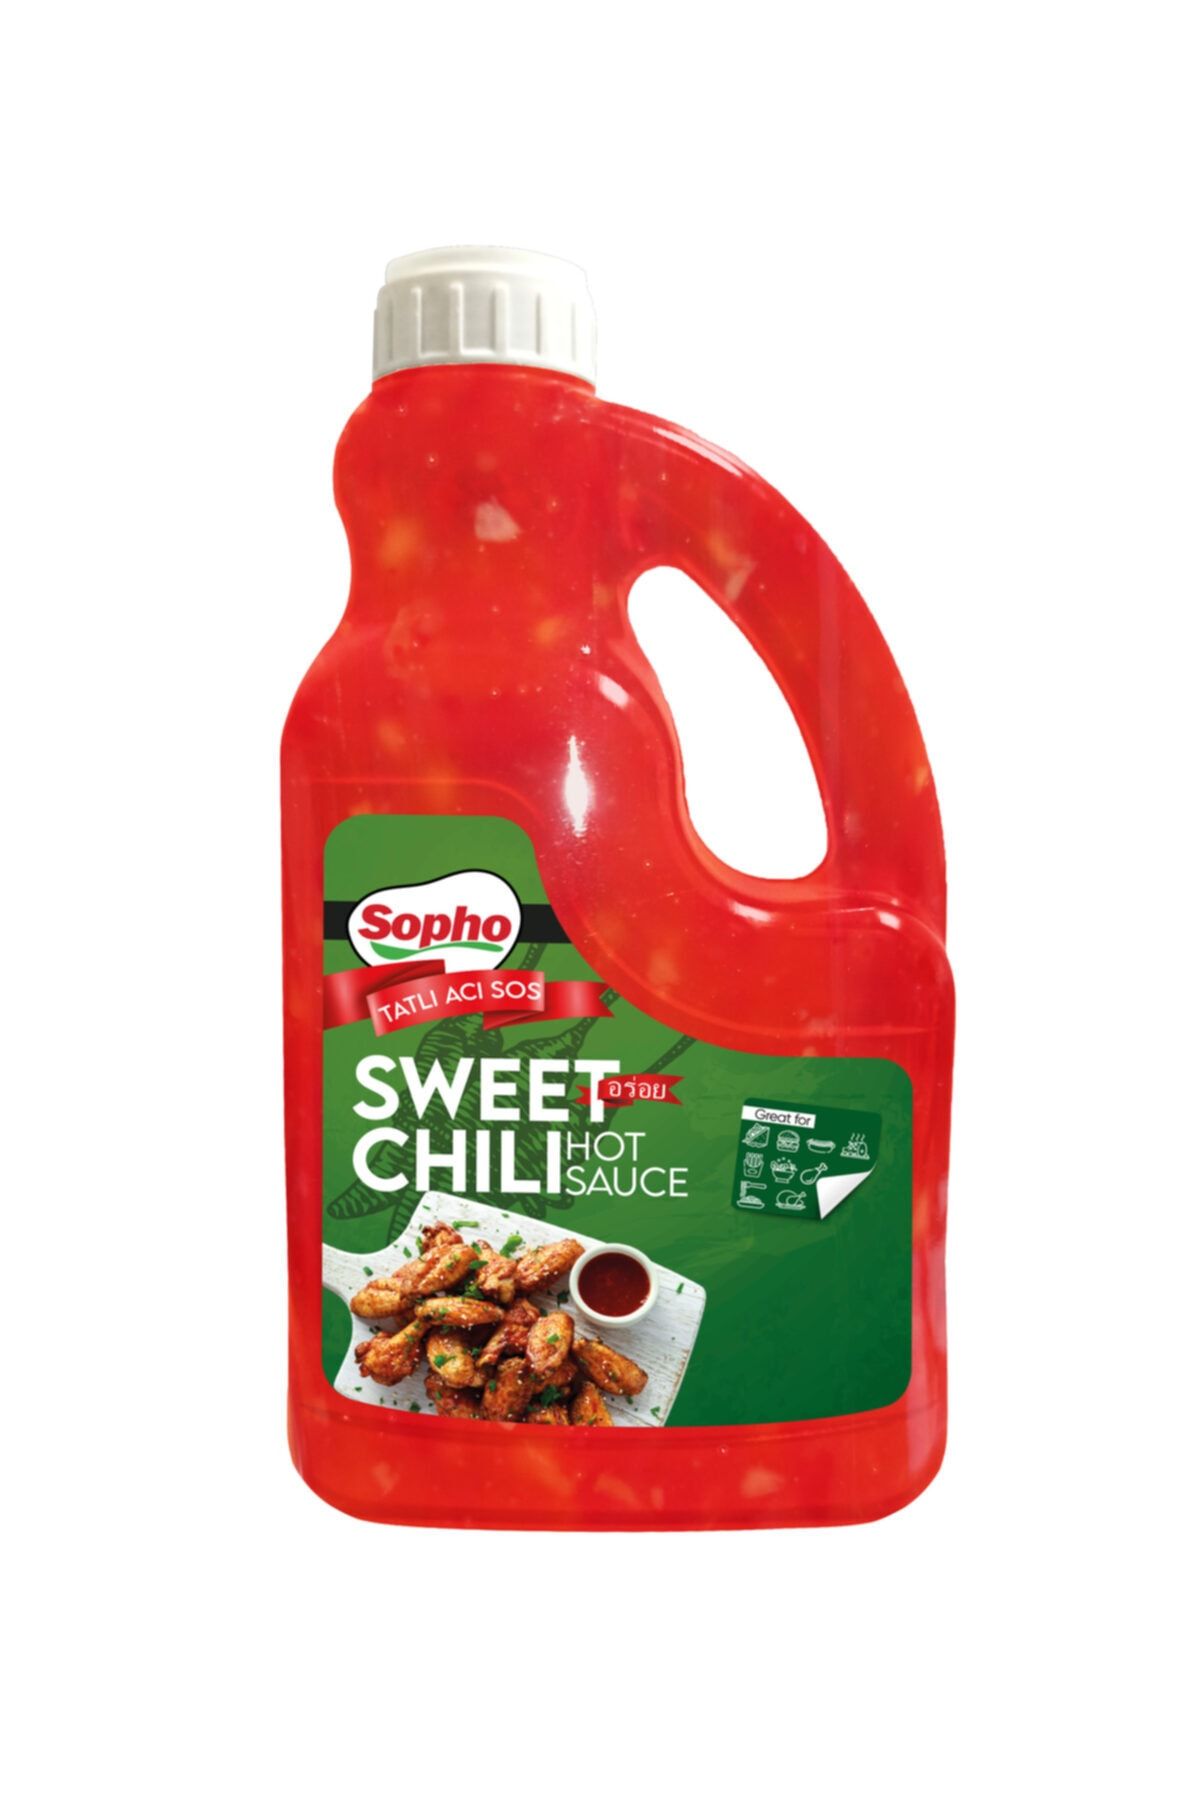 Sopho Sweet Chili Sauce 4650 gr (TATLI ACI SOS)